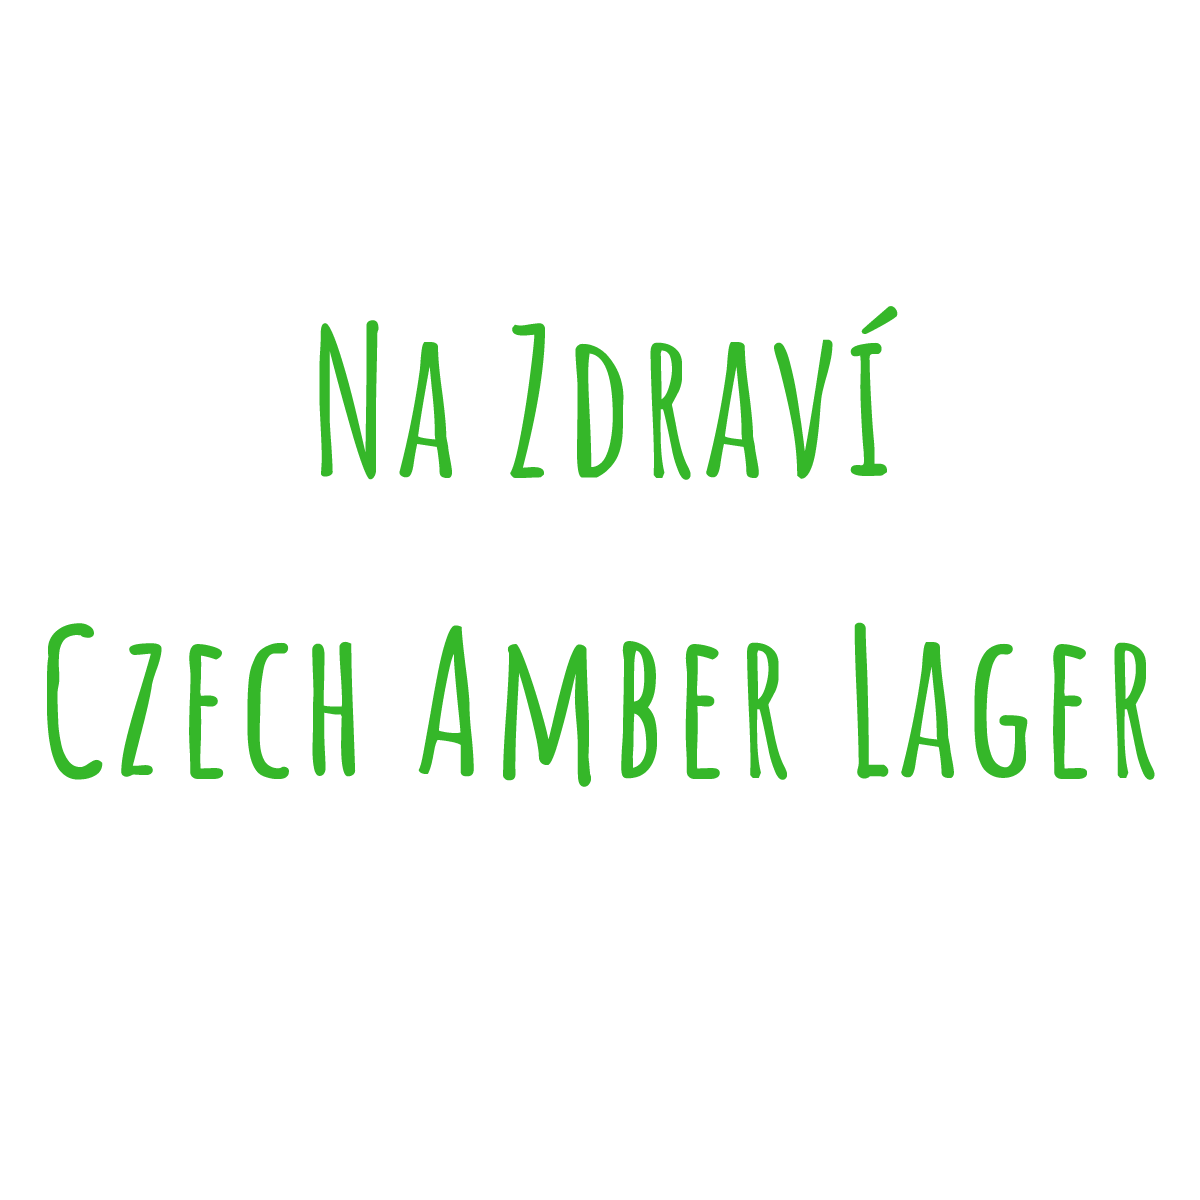 Bierrezept Na zdravi Czech Amber Lager